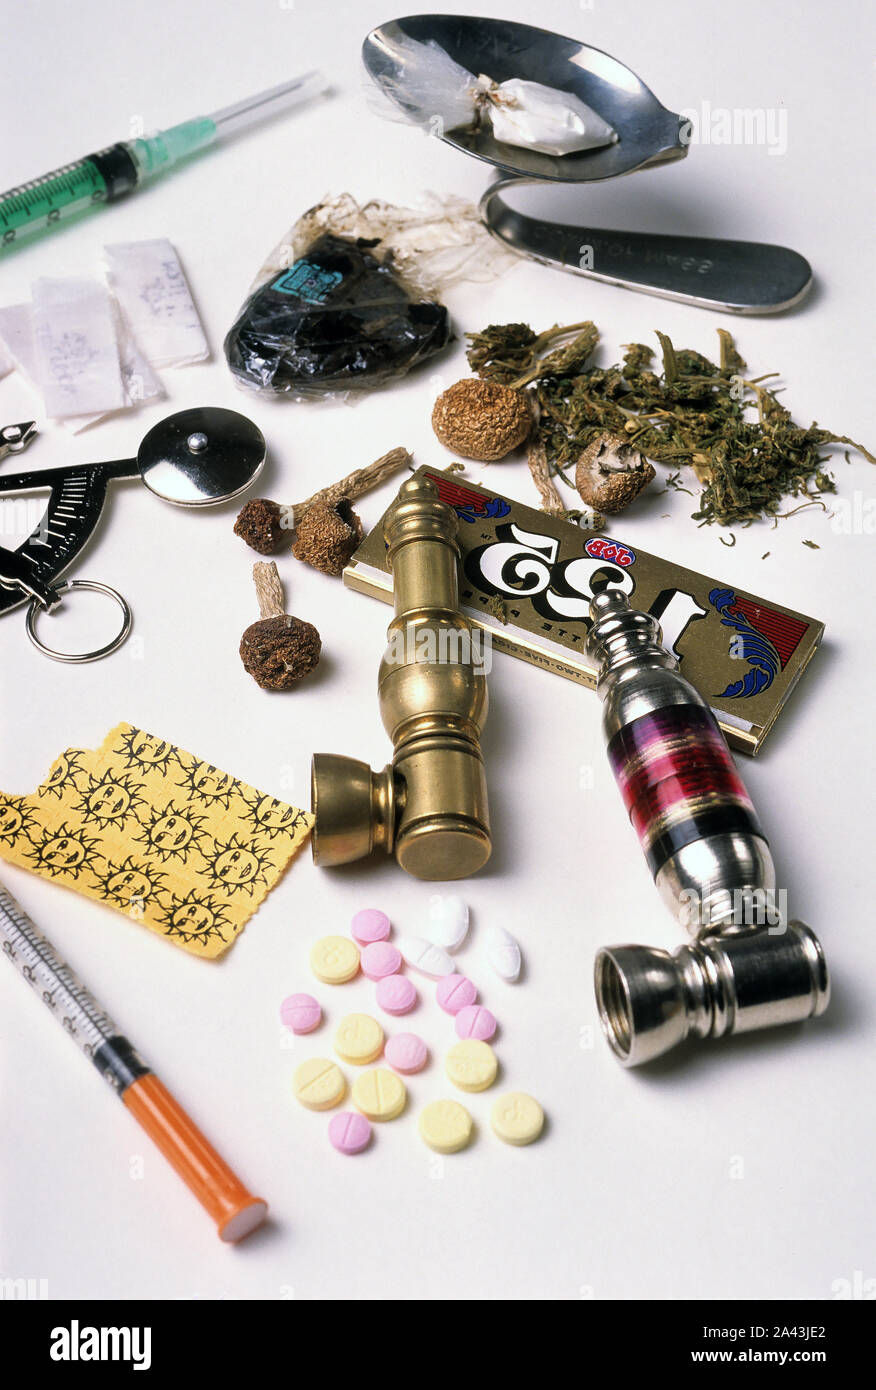 Illicit drugs and paraphernalia on display Stock Photo